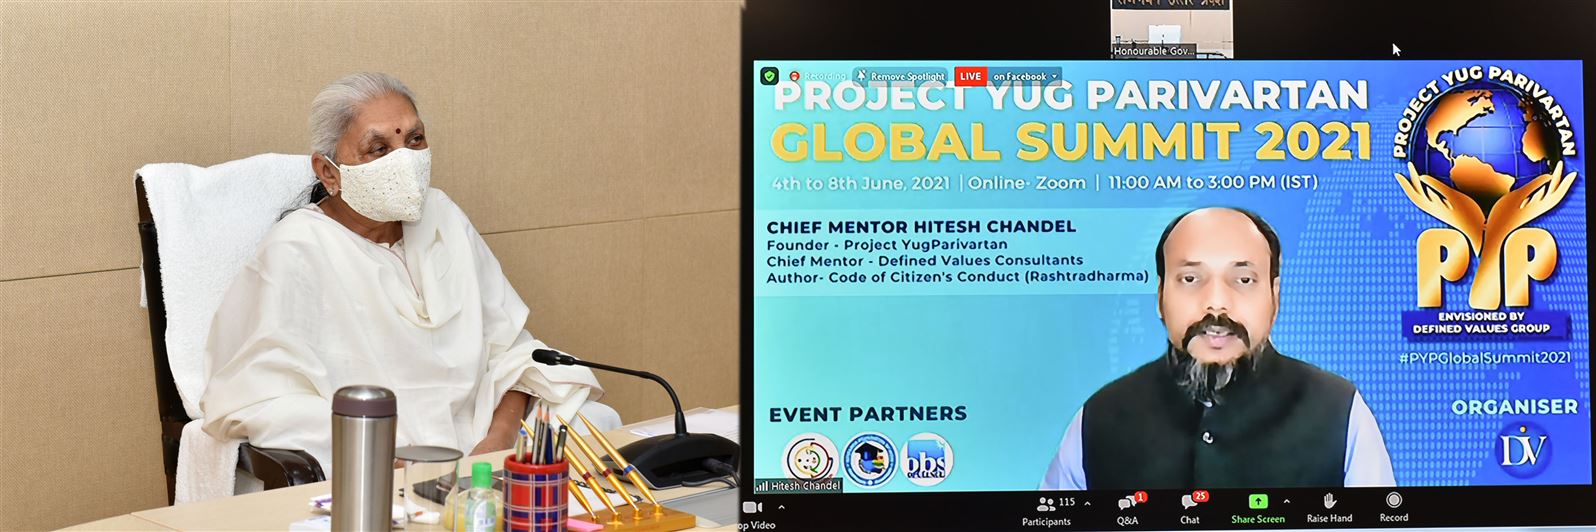 The Governor addressed ‘Project Yug Parivartan Vaishvik Shikhar Sammelan-2021’ webinar./राज्यपाल ने ‘प्रोजेक्ट युग परिवर्तन वैश्विक शिखर सम्मेलन-2021’ विषयक वेबिनार को संबोधित किया